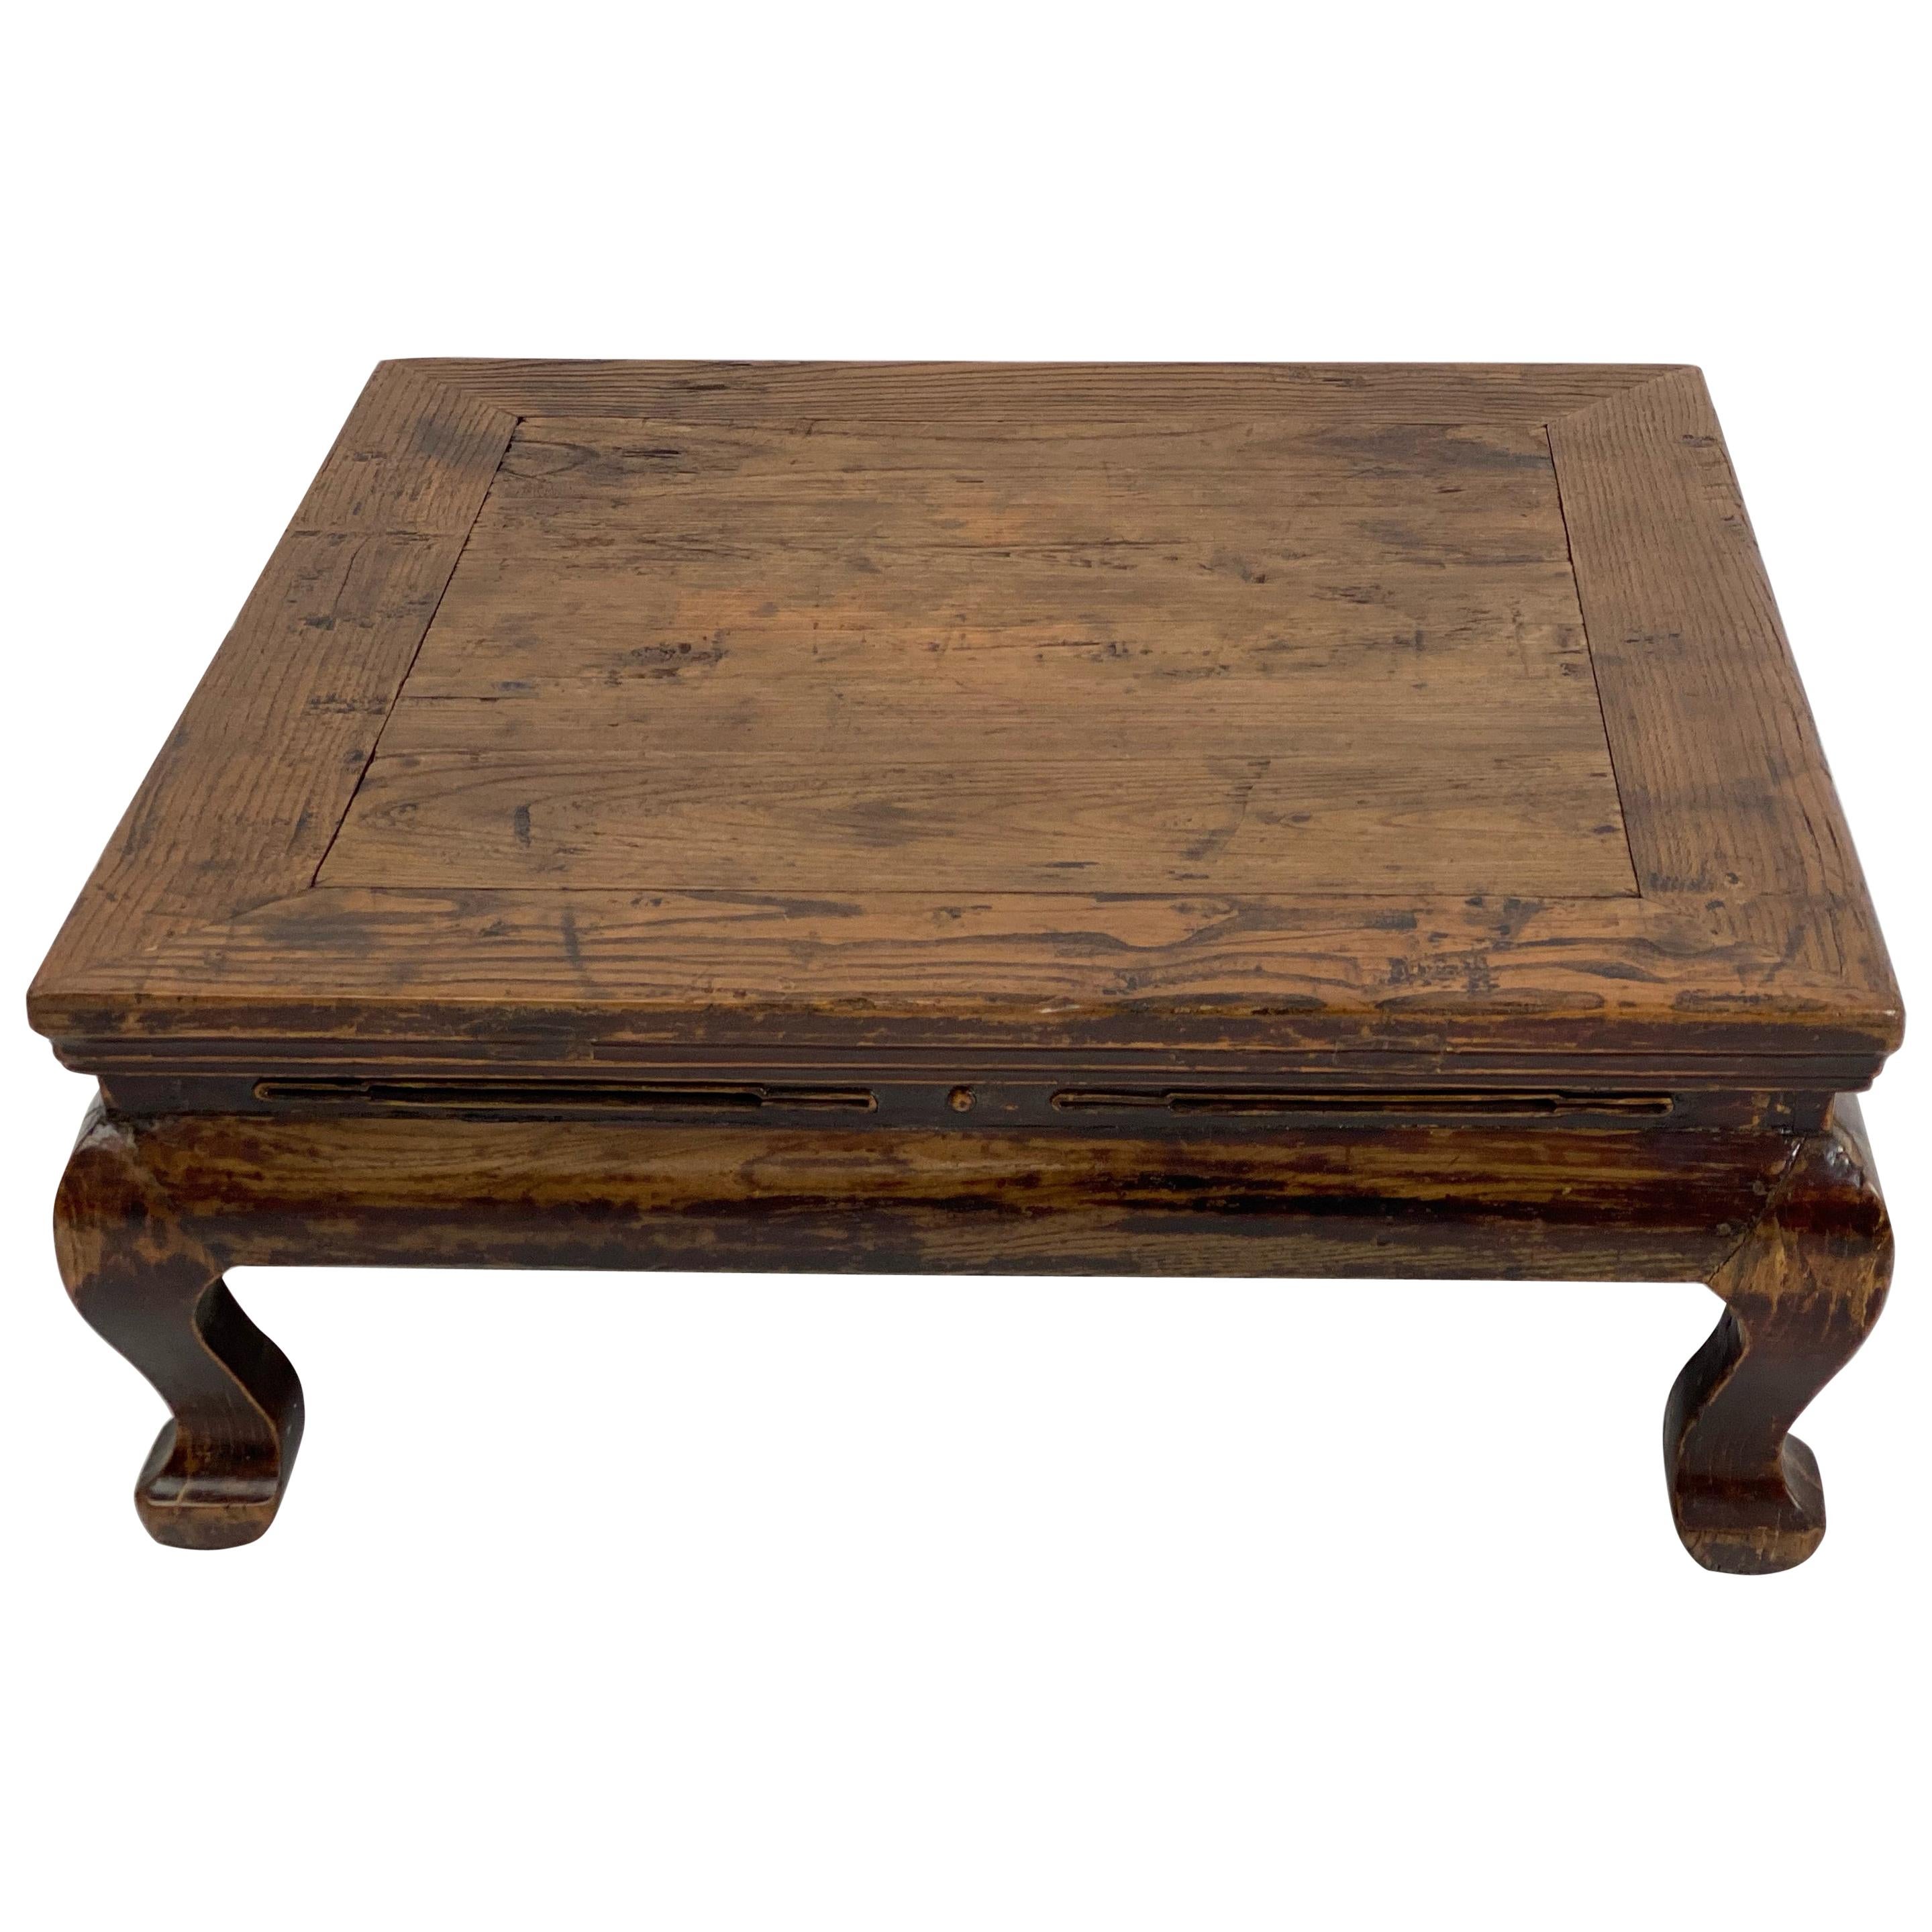 Colonial  Antique Coffee Table in Teak Wood